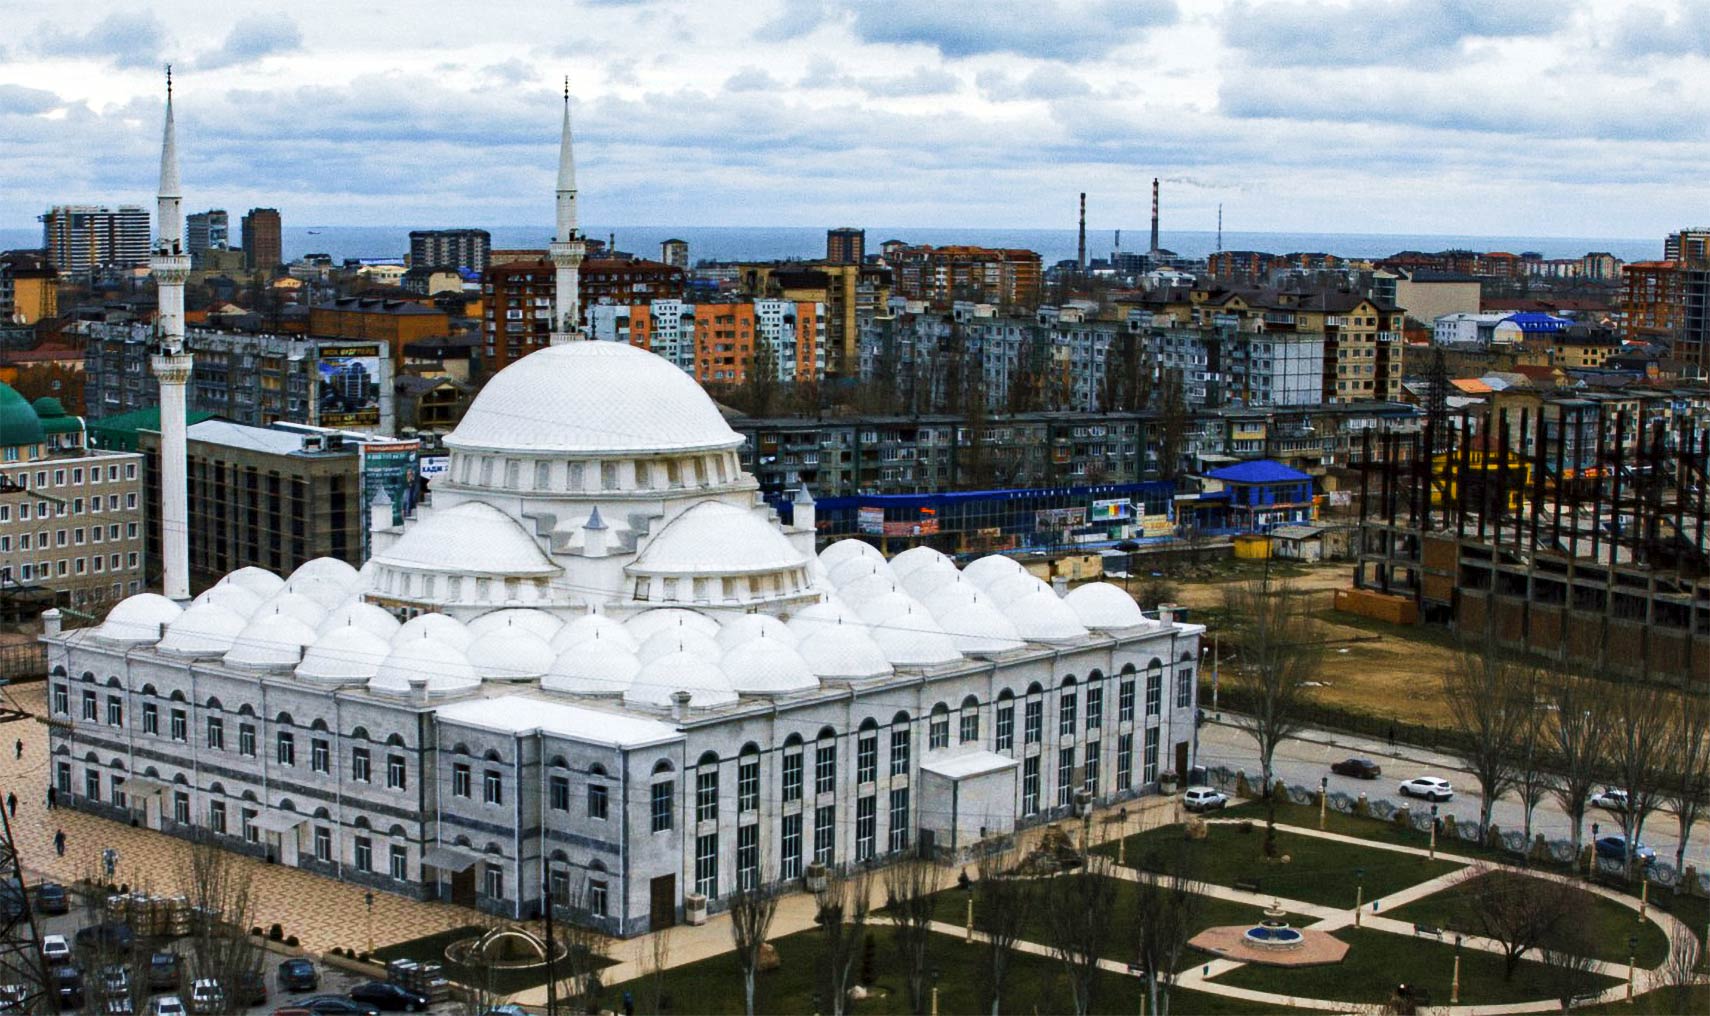 Grand Mosque of Makhachkala, Dagestan, Russia